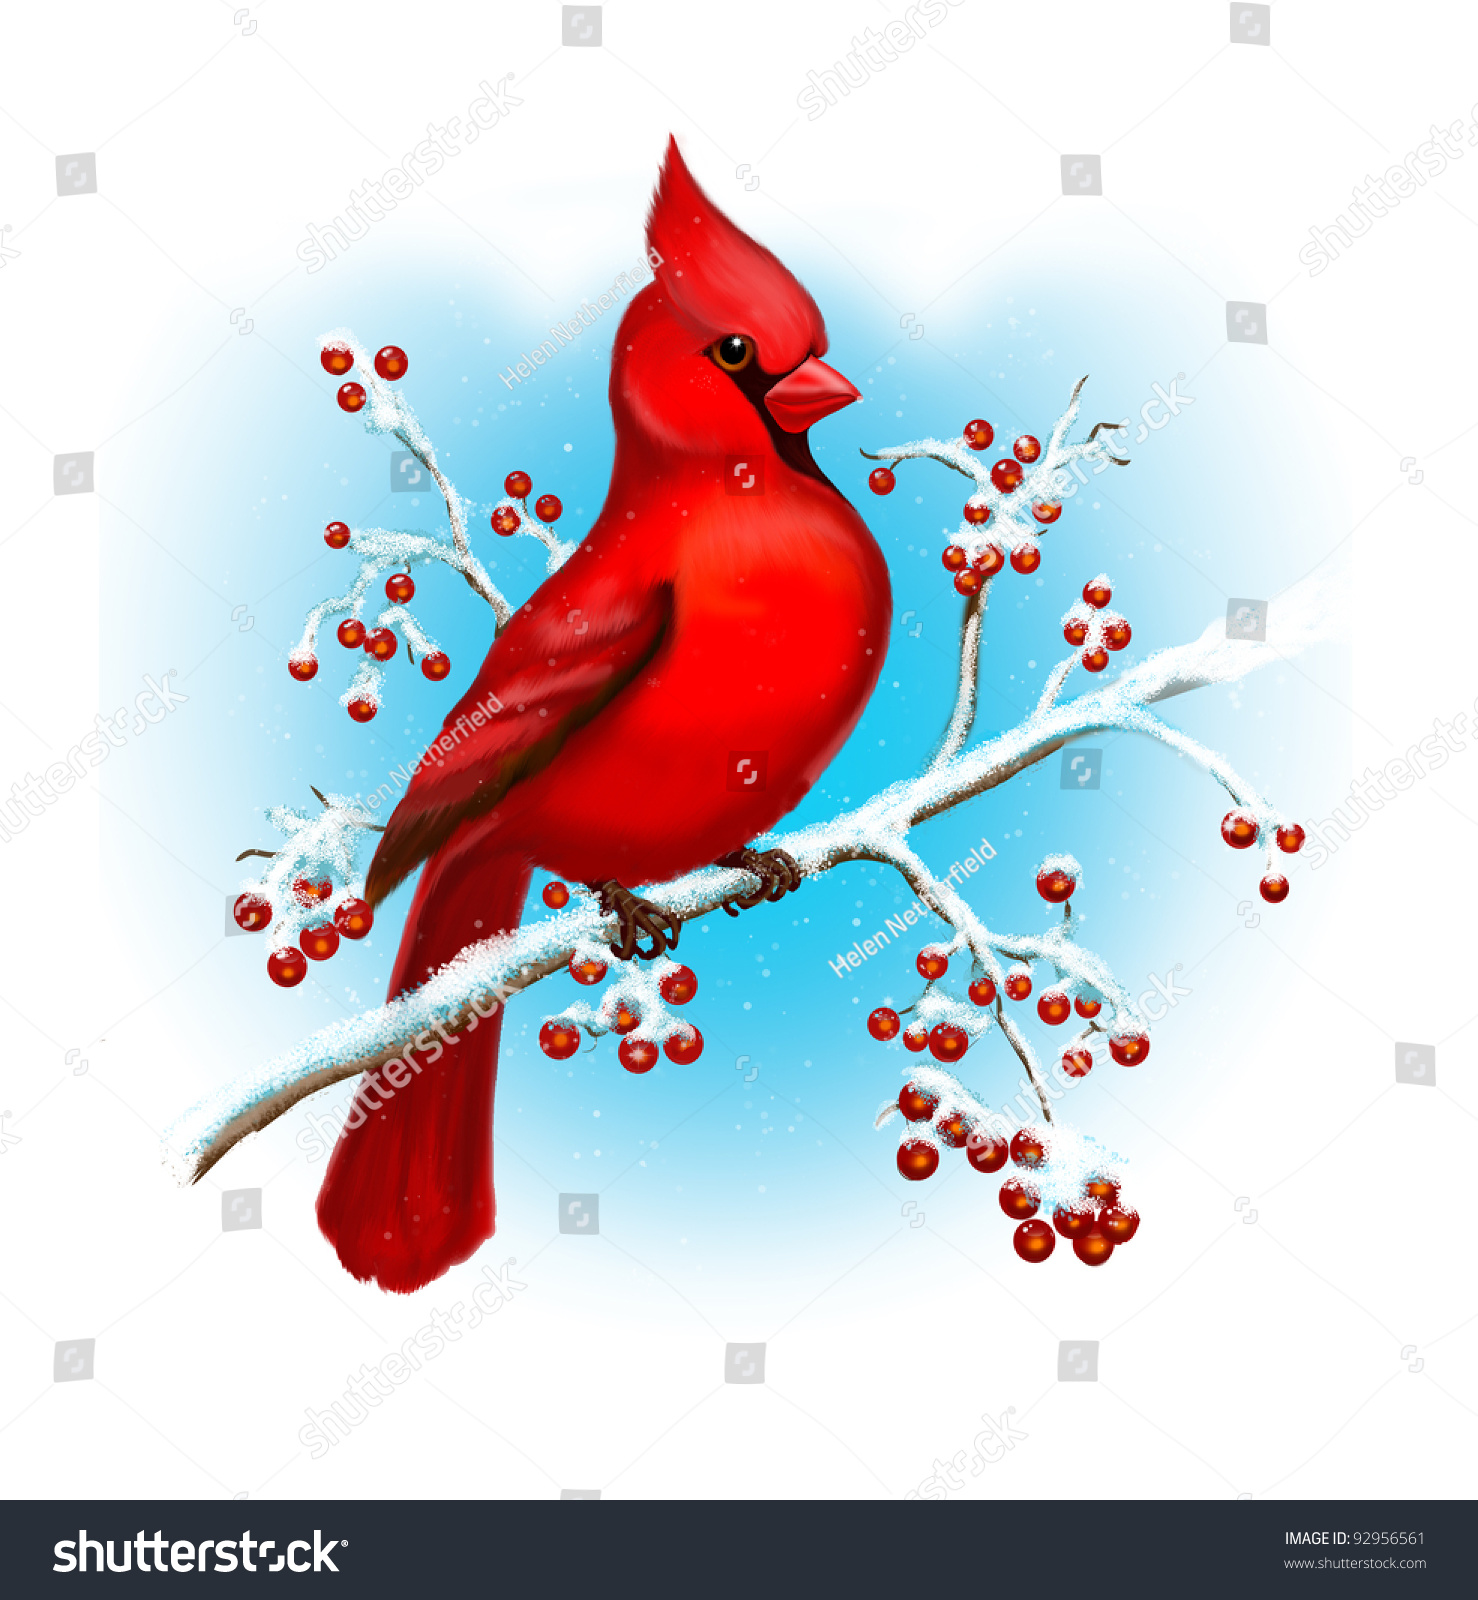 Птица красная и птица синяя